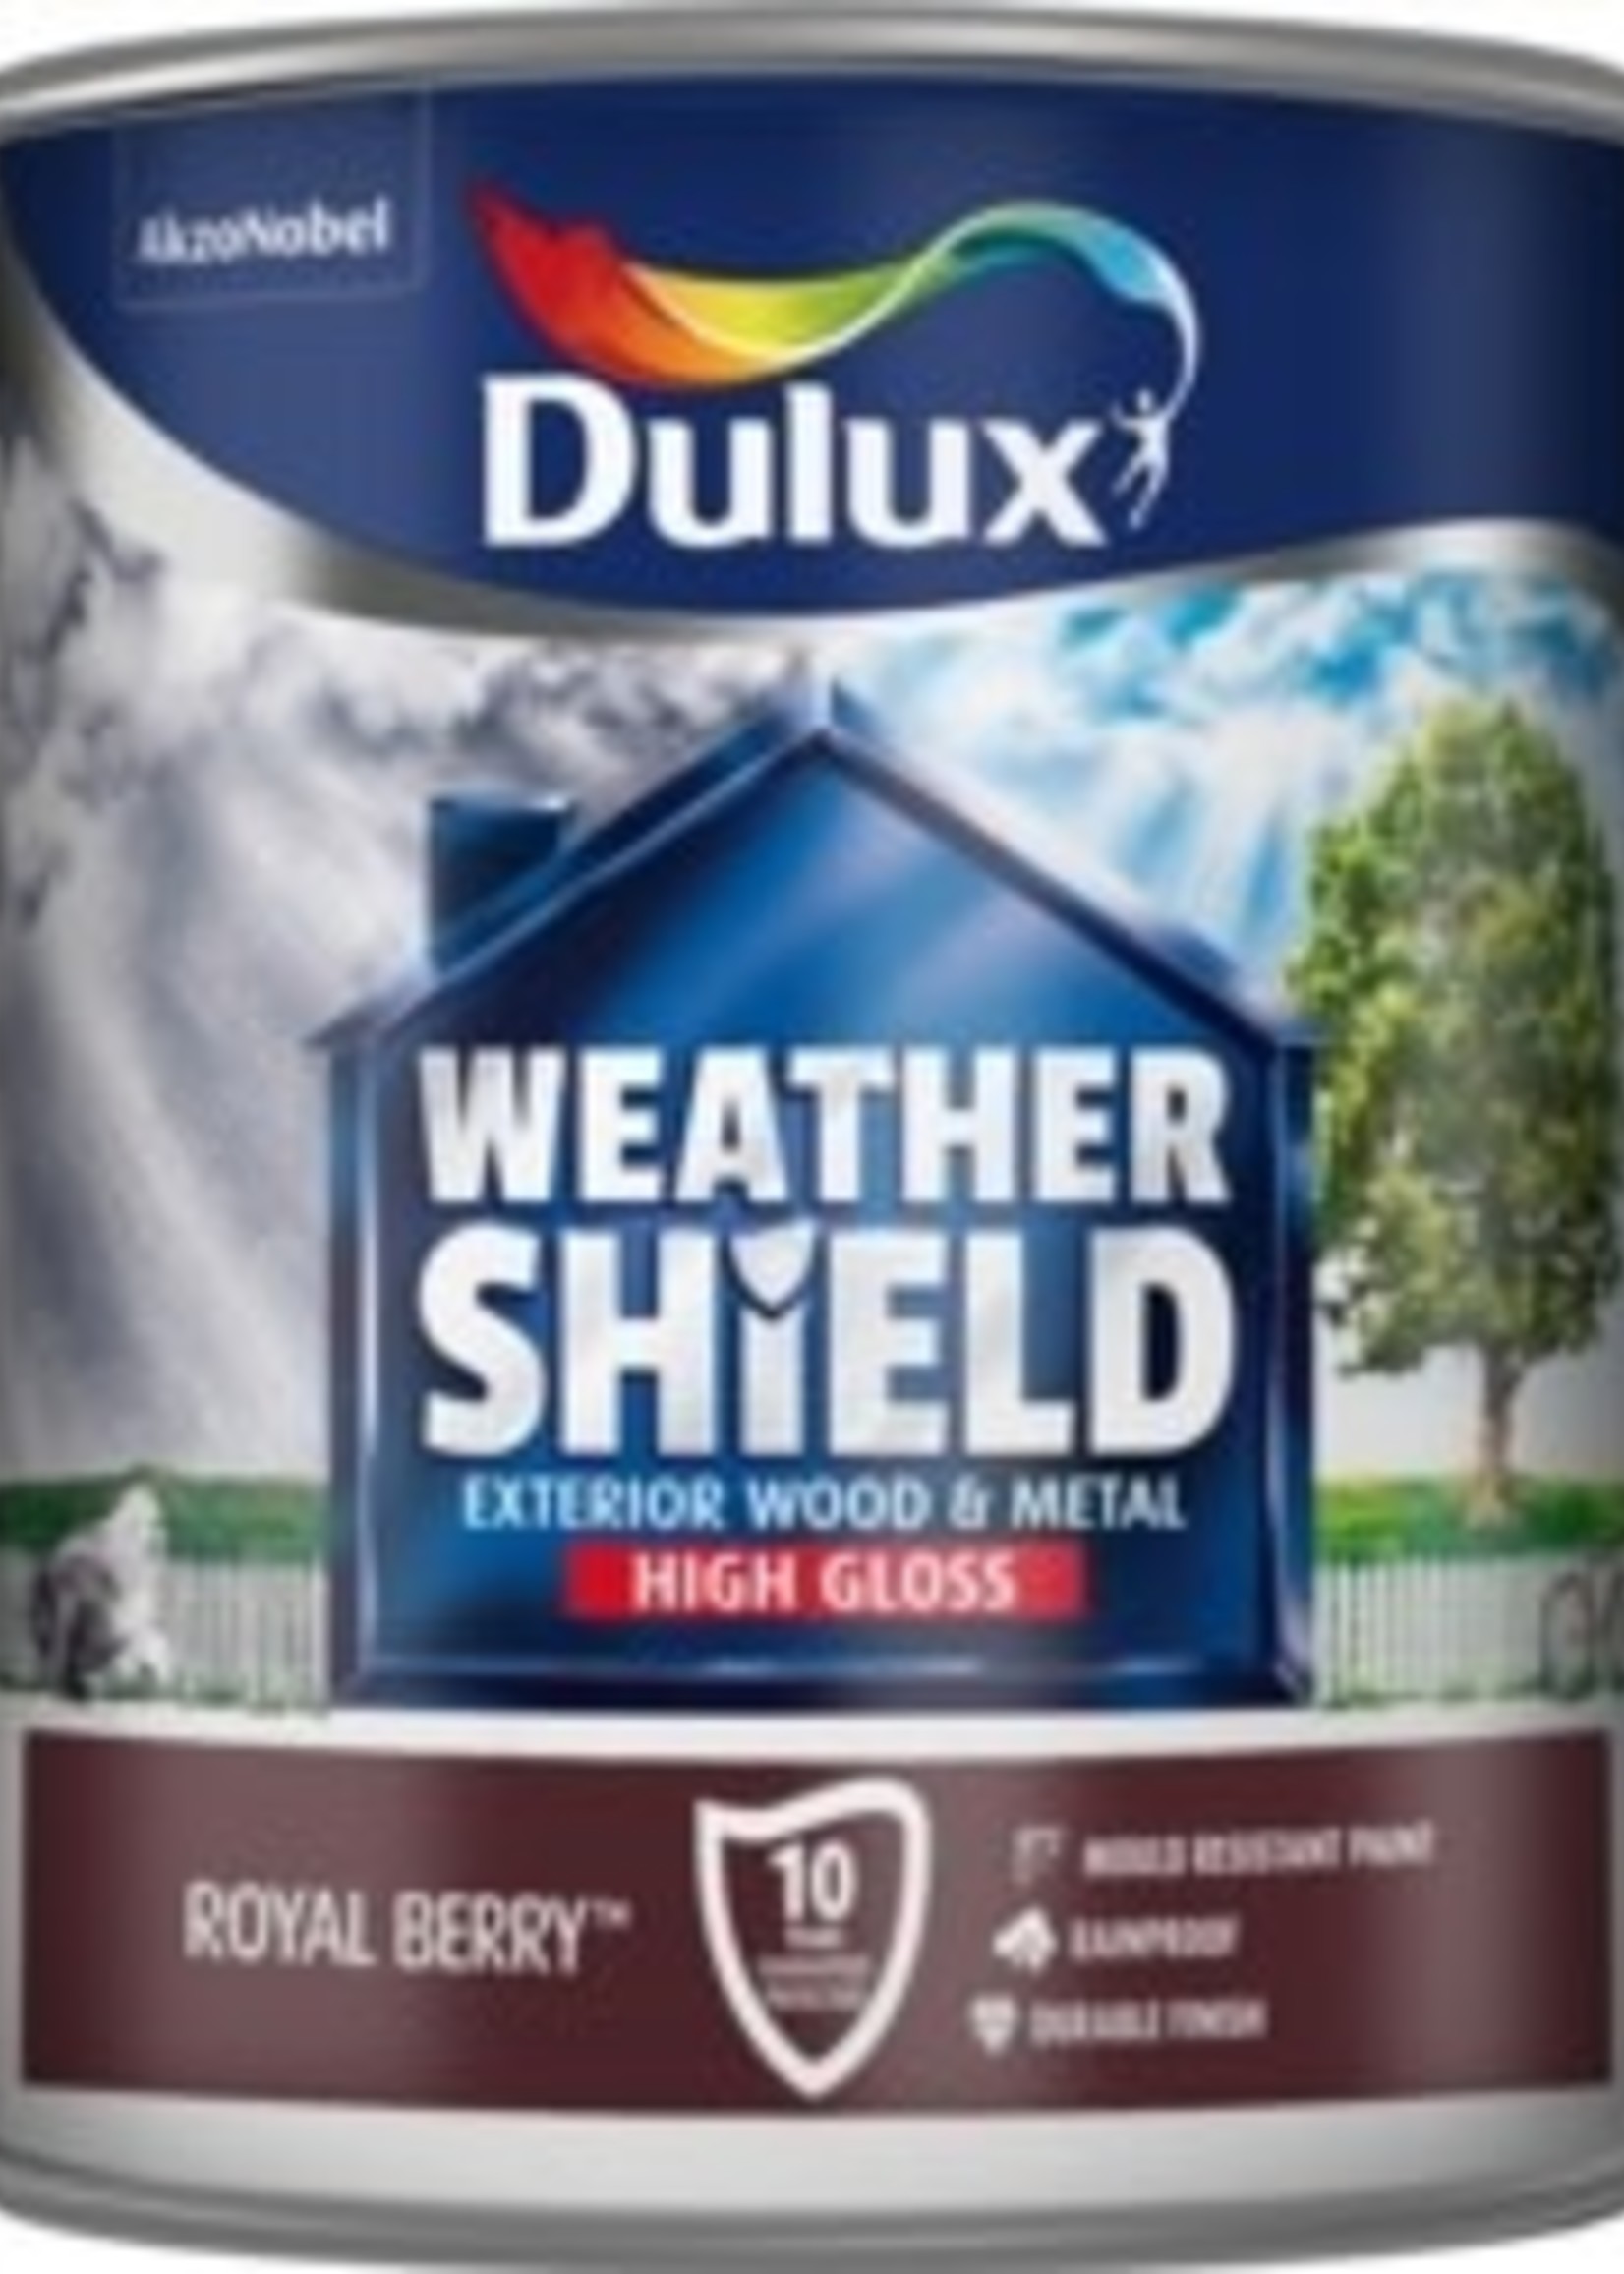 Dulux (Akzo Nobel) Dulux Weathershield